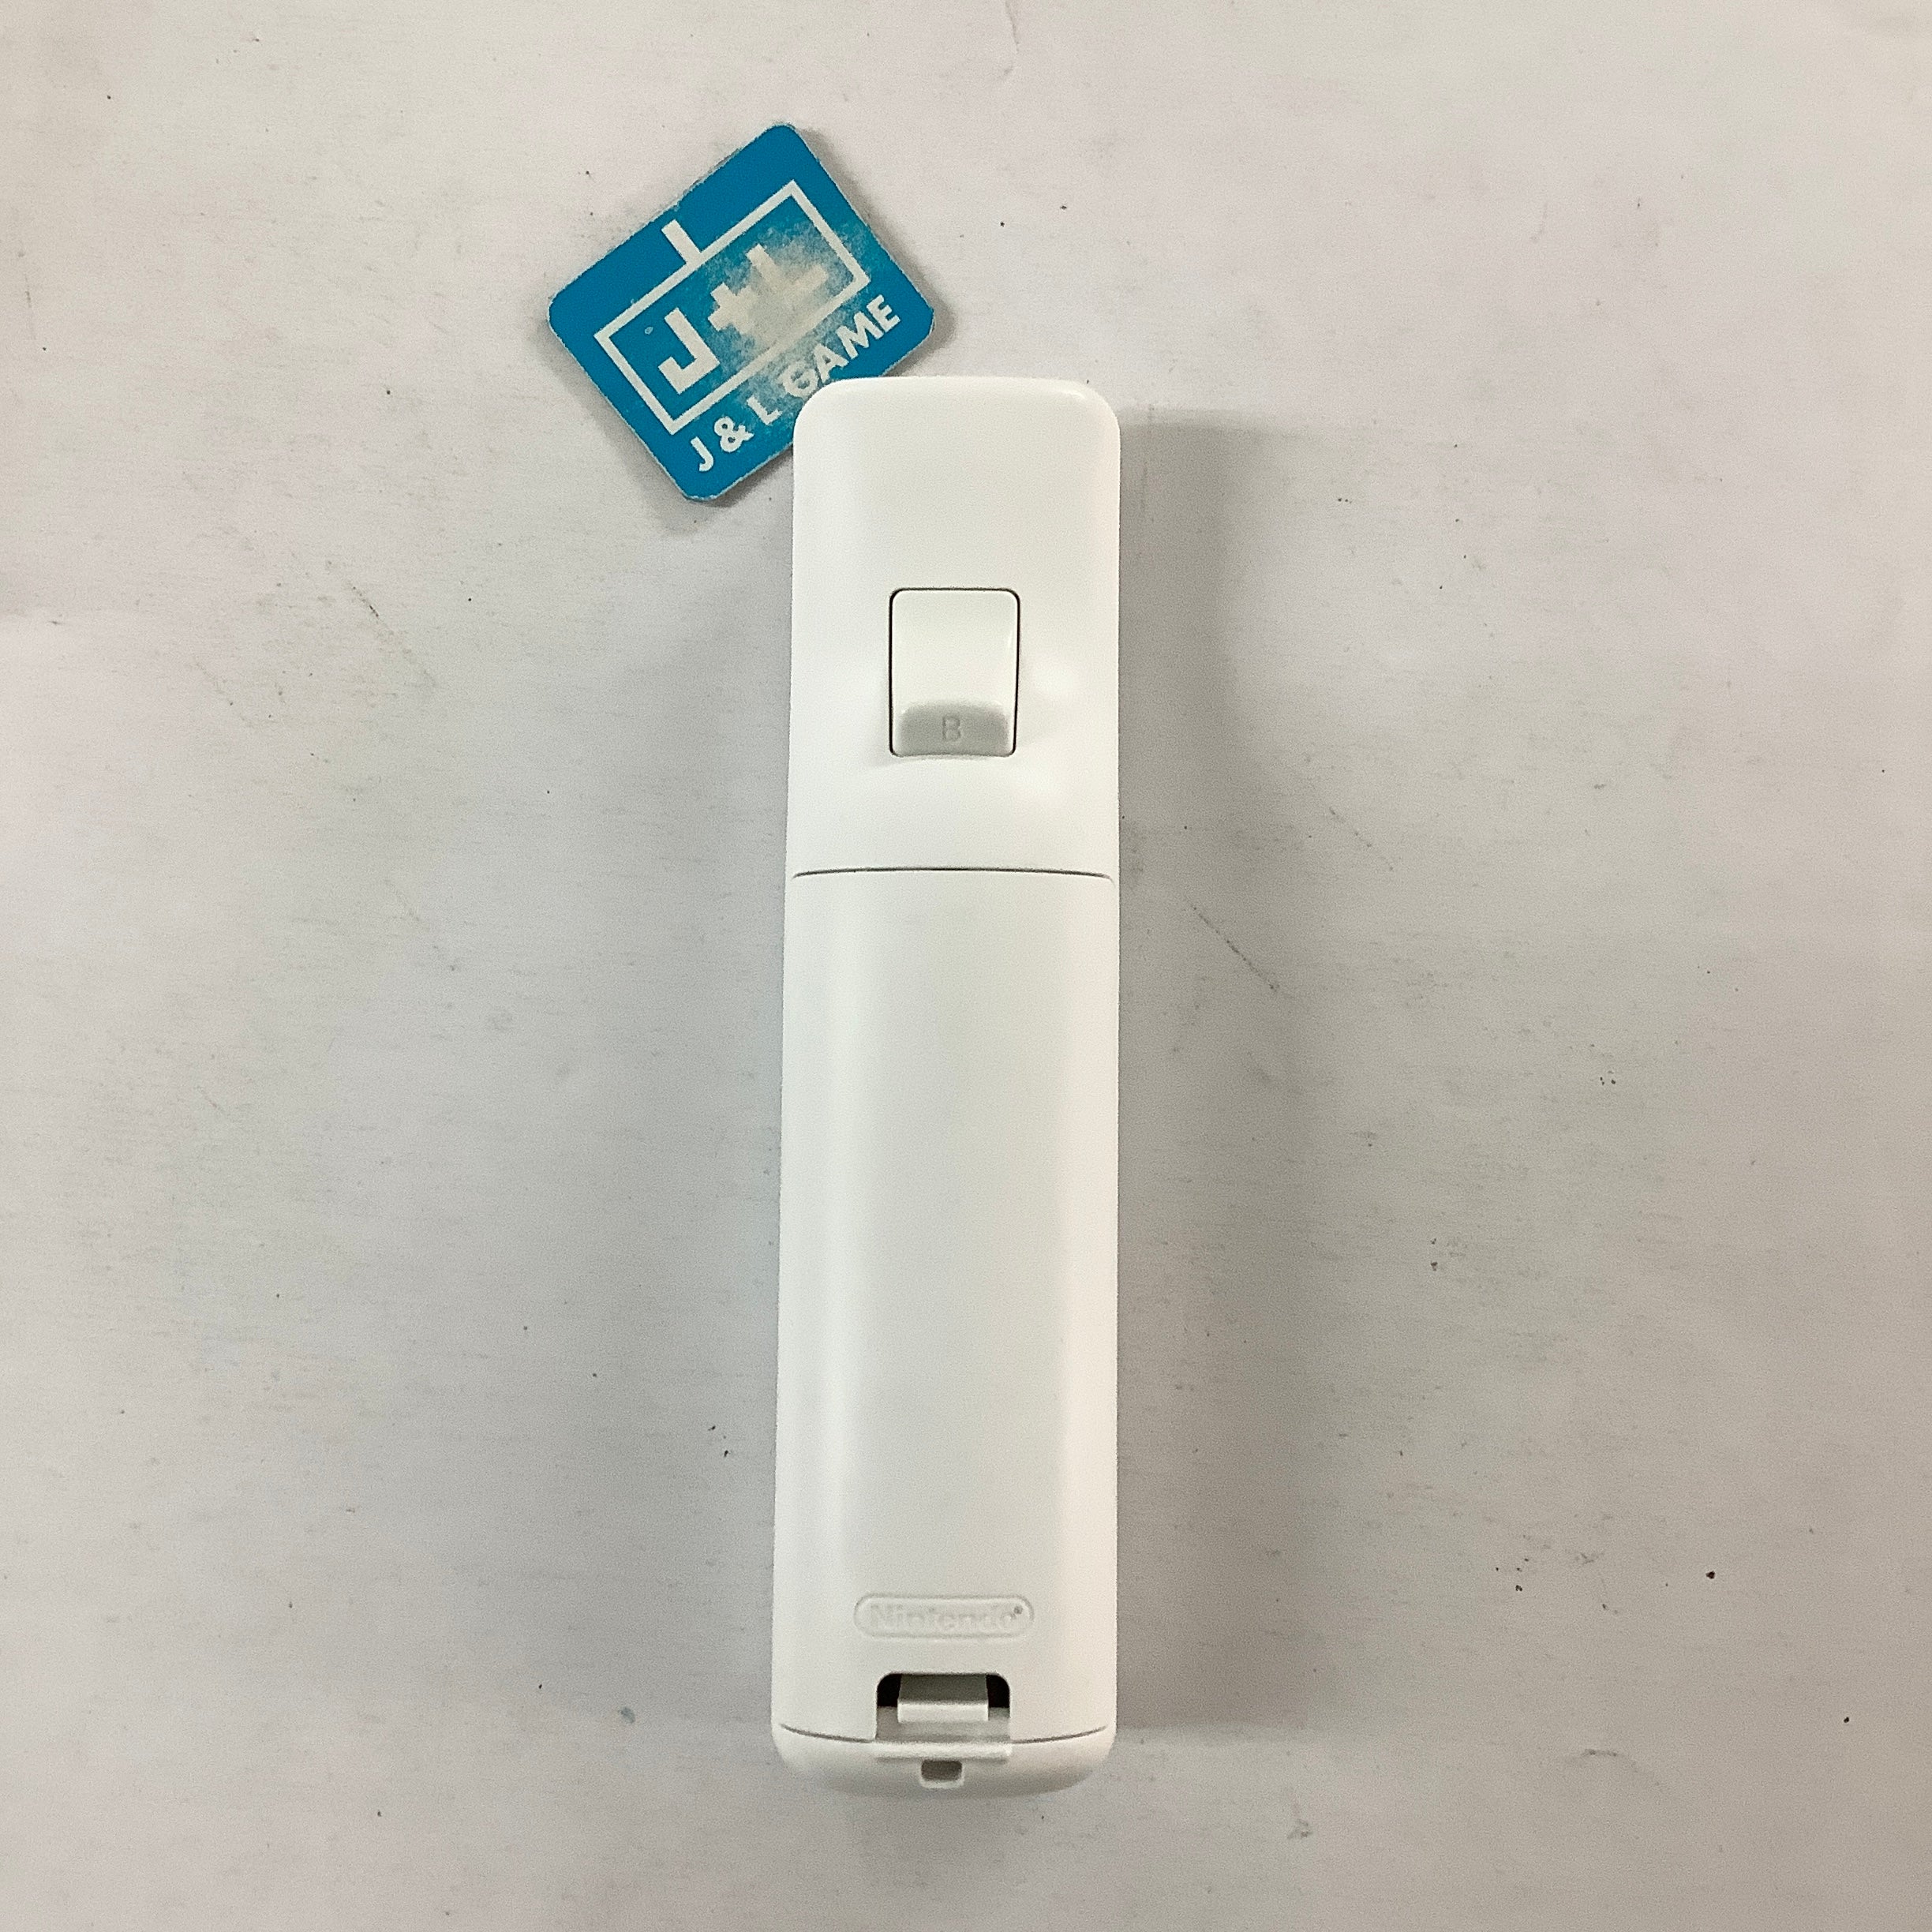 Nintendo Wii Remote Controller (White)  - Nintendo Wii [Pre-Owned] Accessories Nintendo   